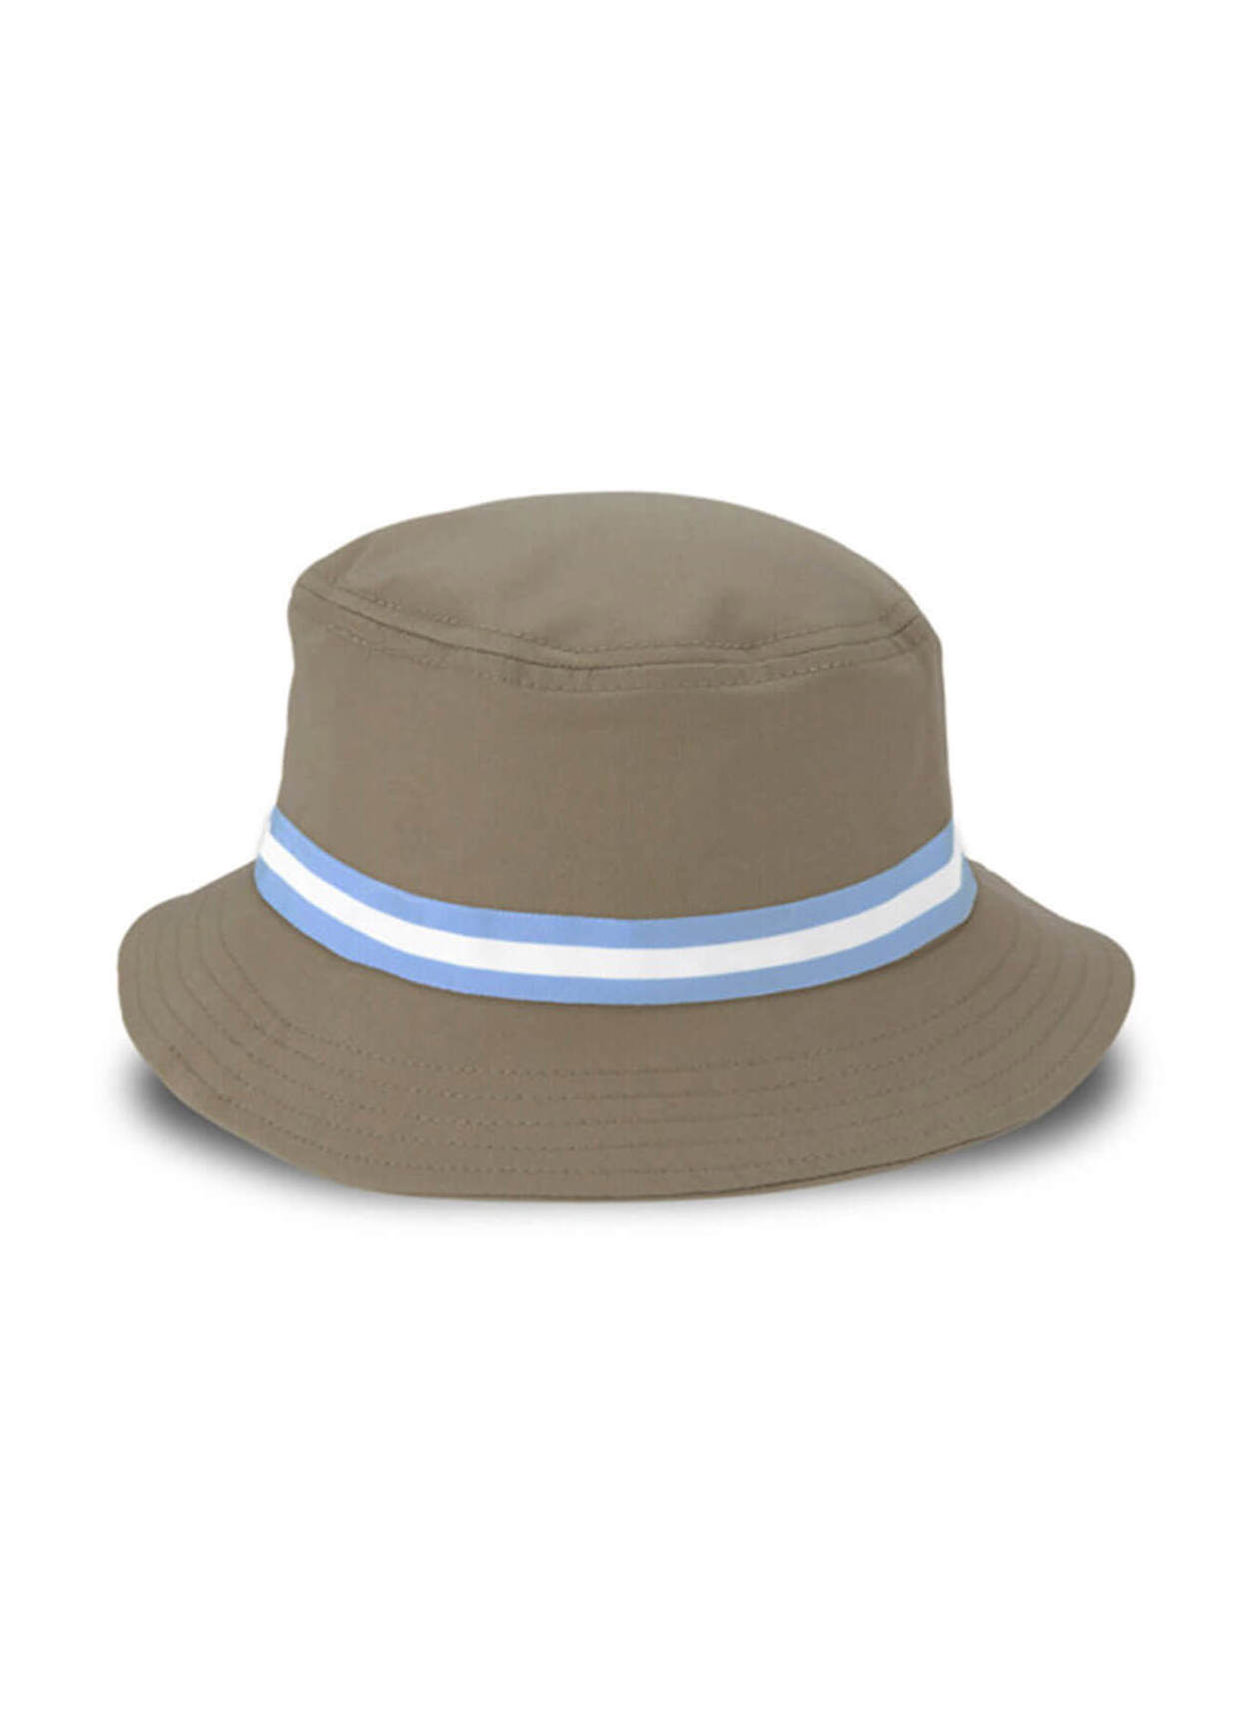 Imperial Khaki / Light Blue The Oxford Bucket Hat